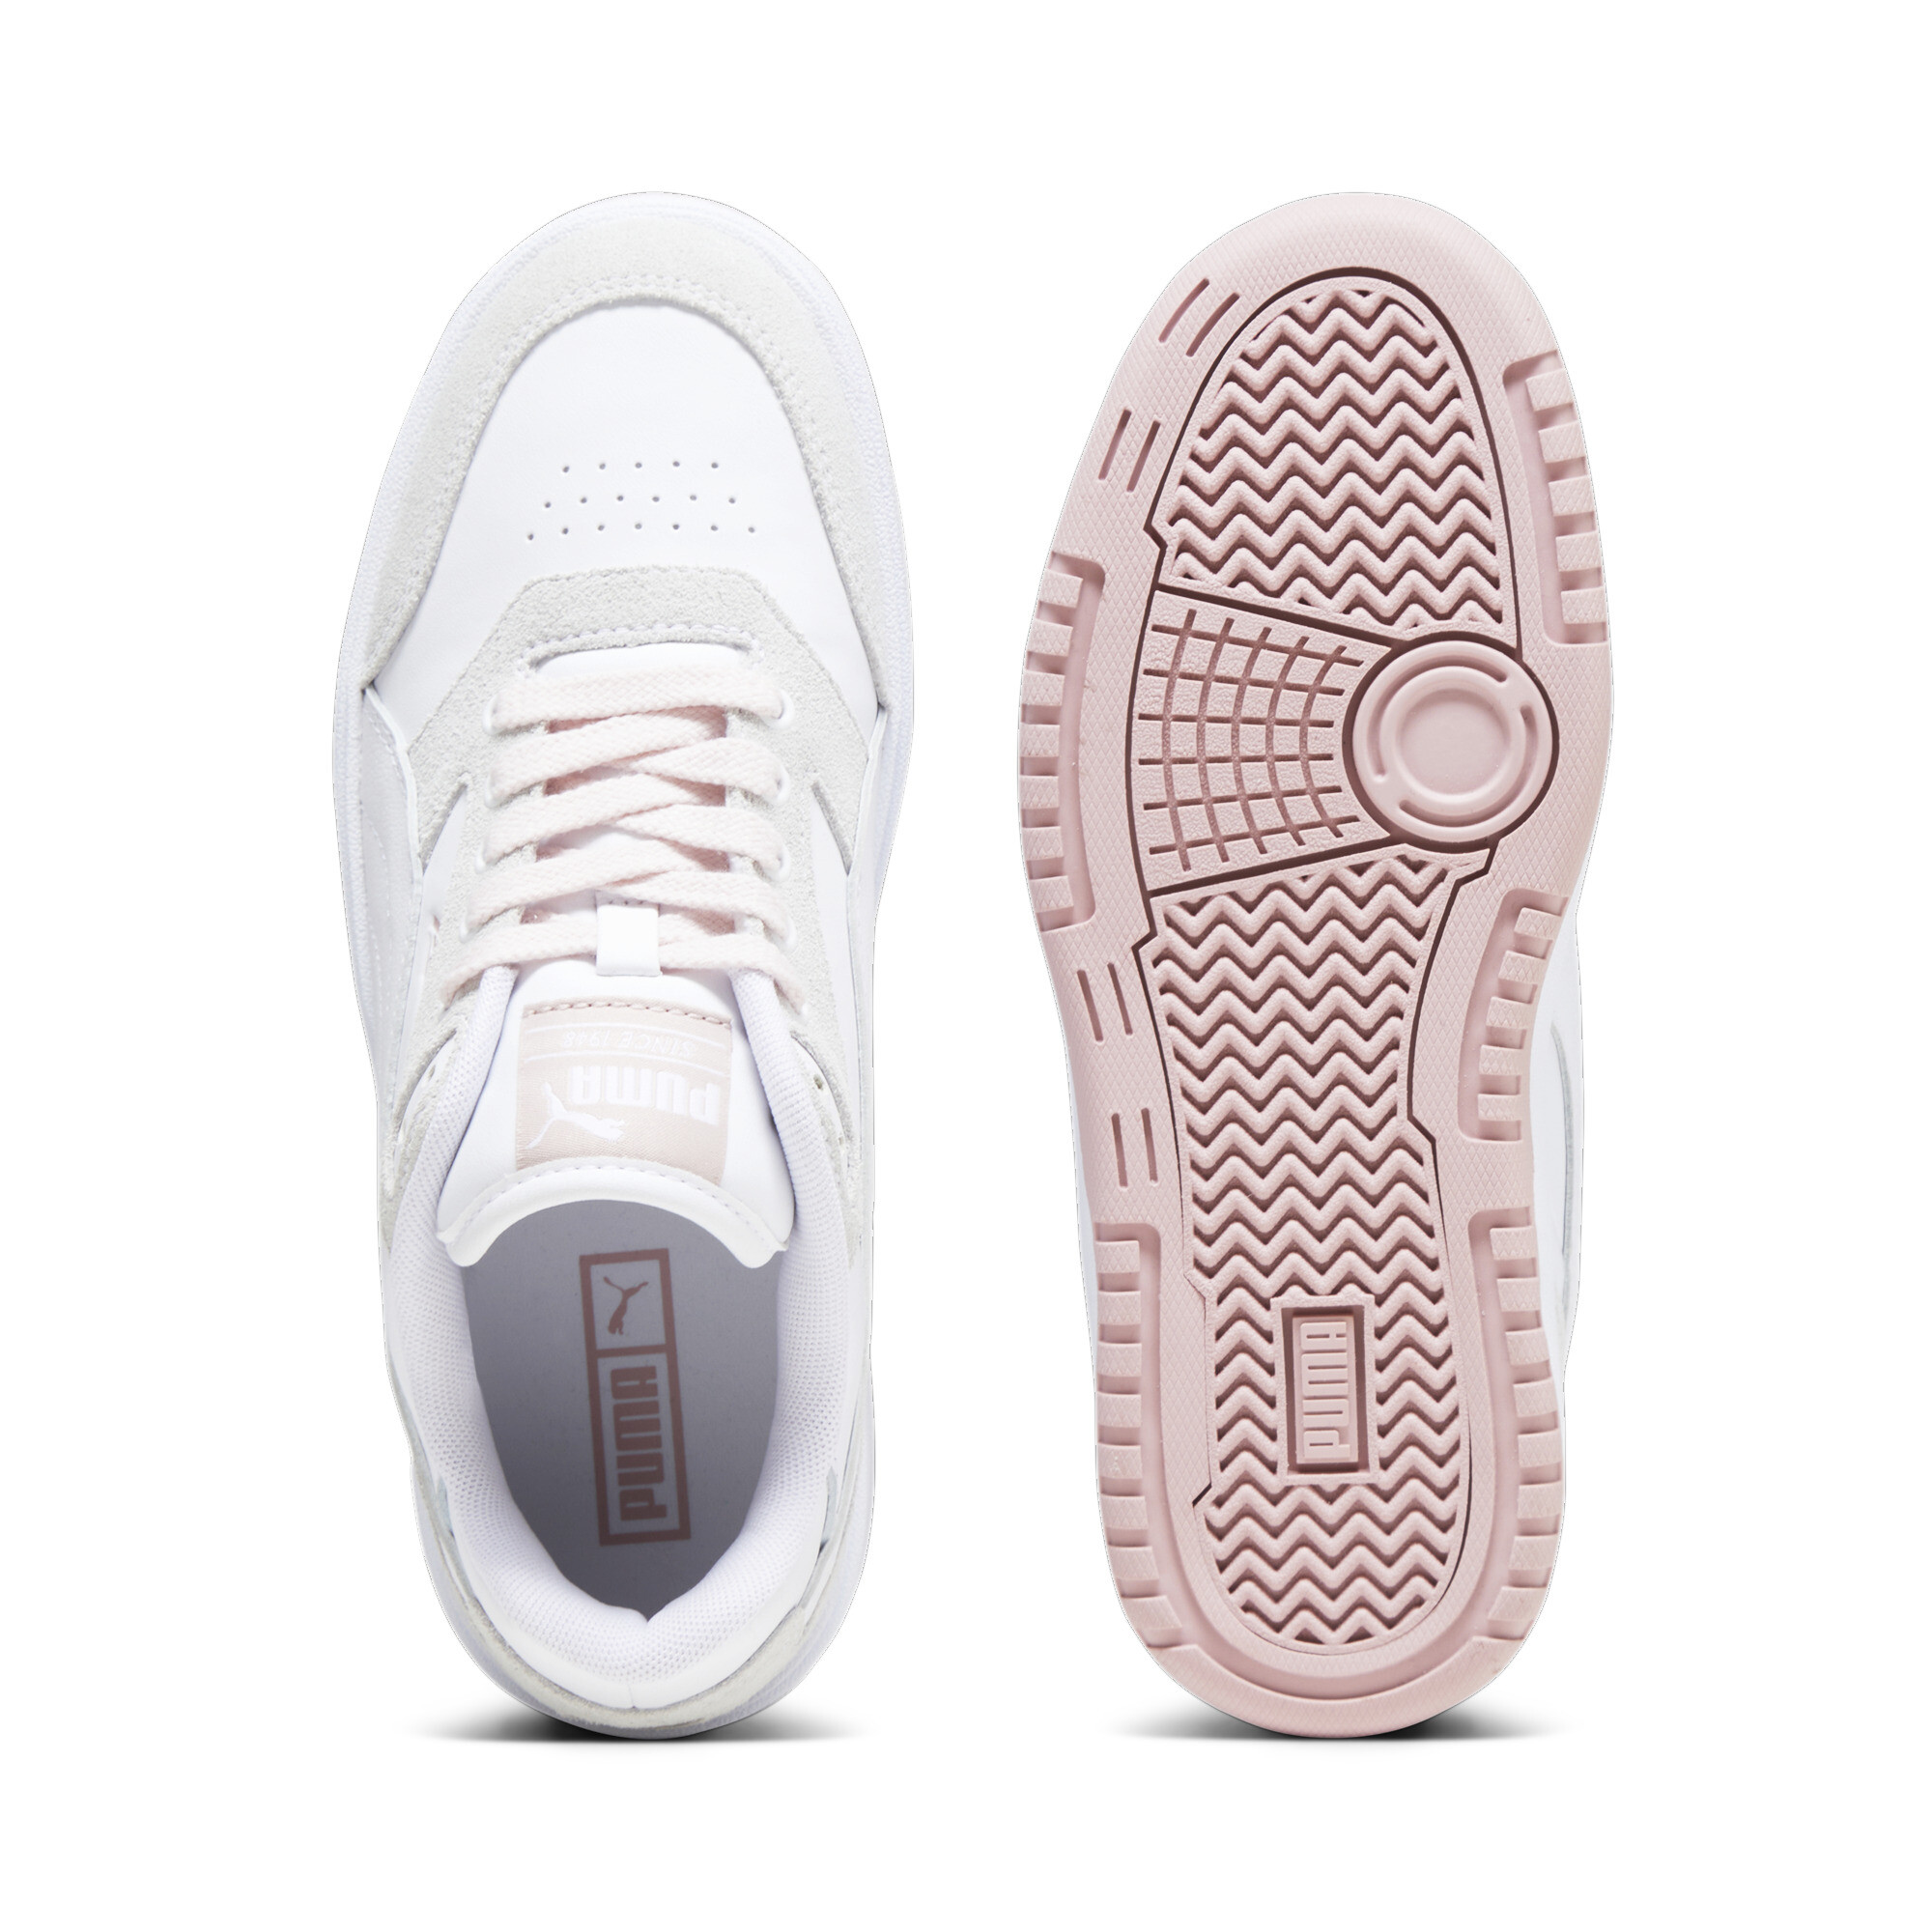 Women's Puma Doublecourt's Sneakers, White, Size 42, Shoes